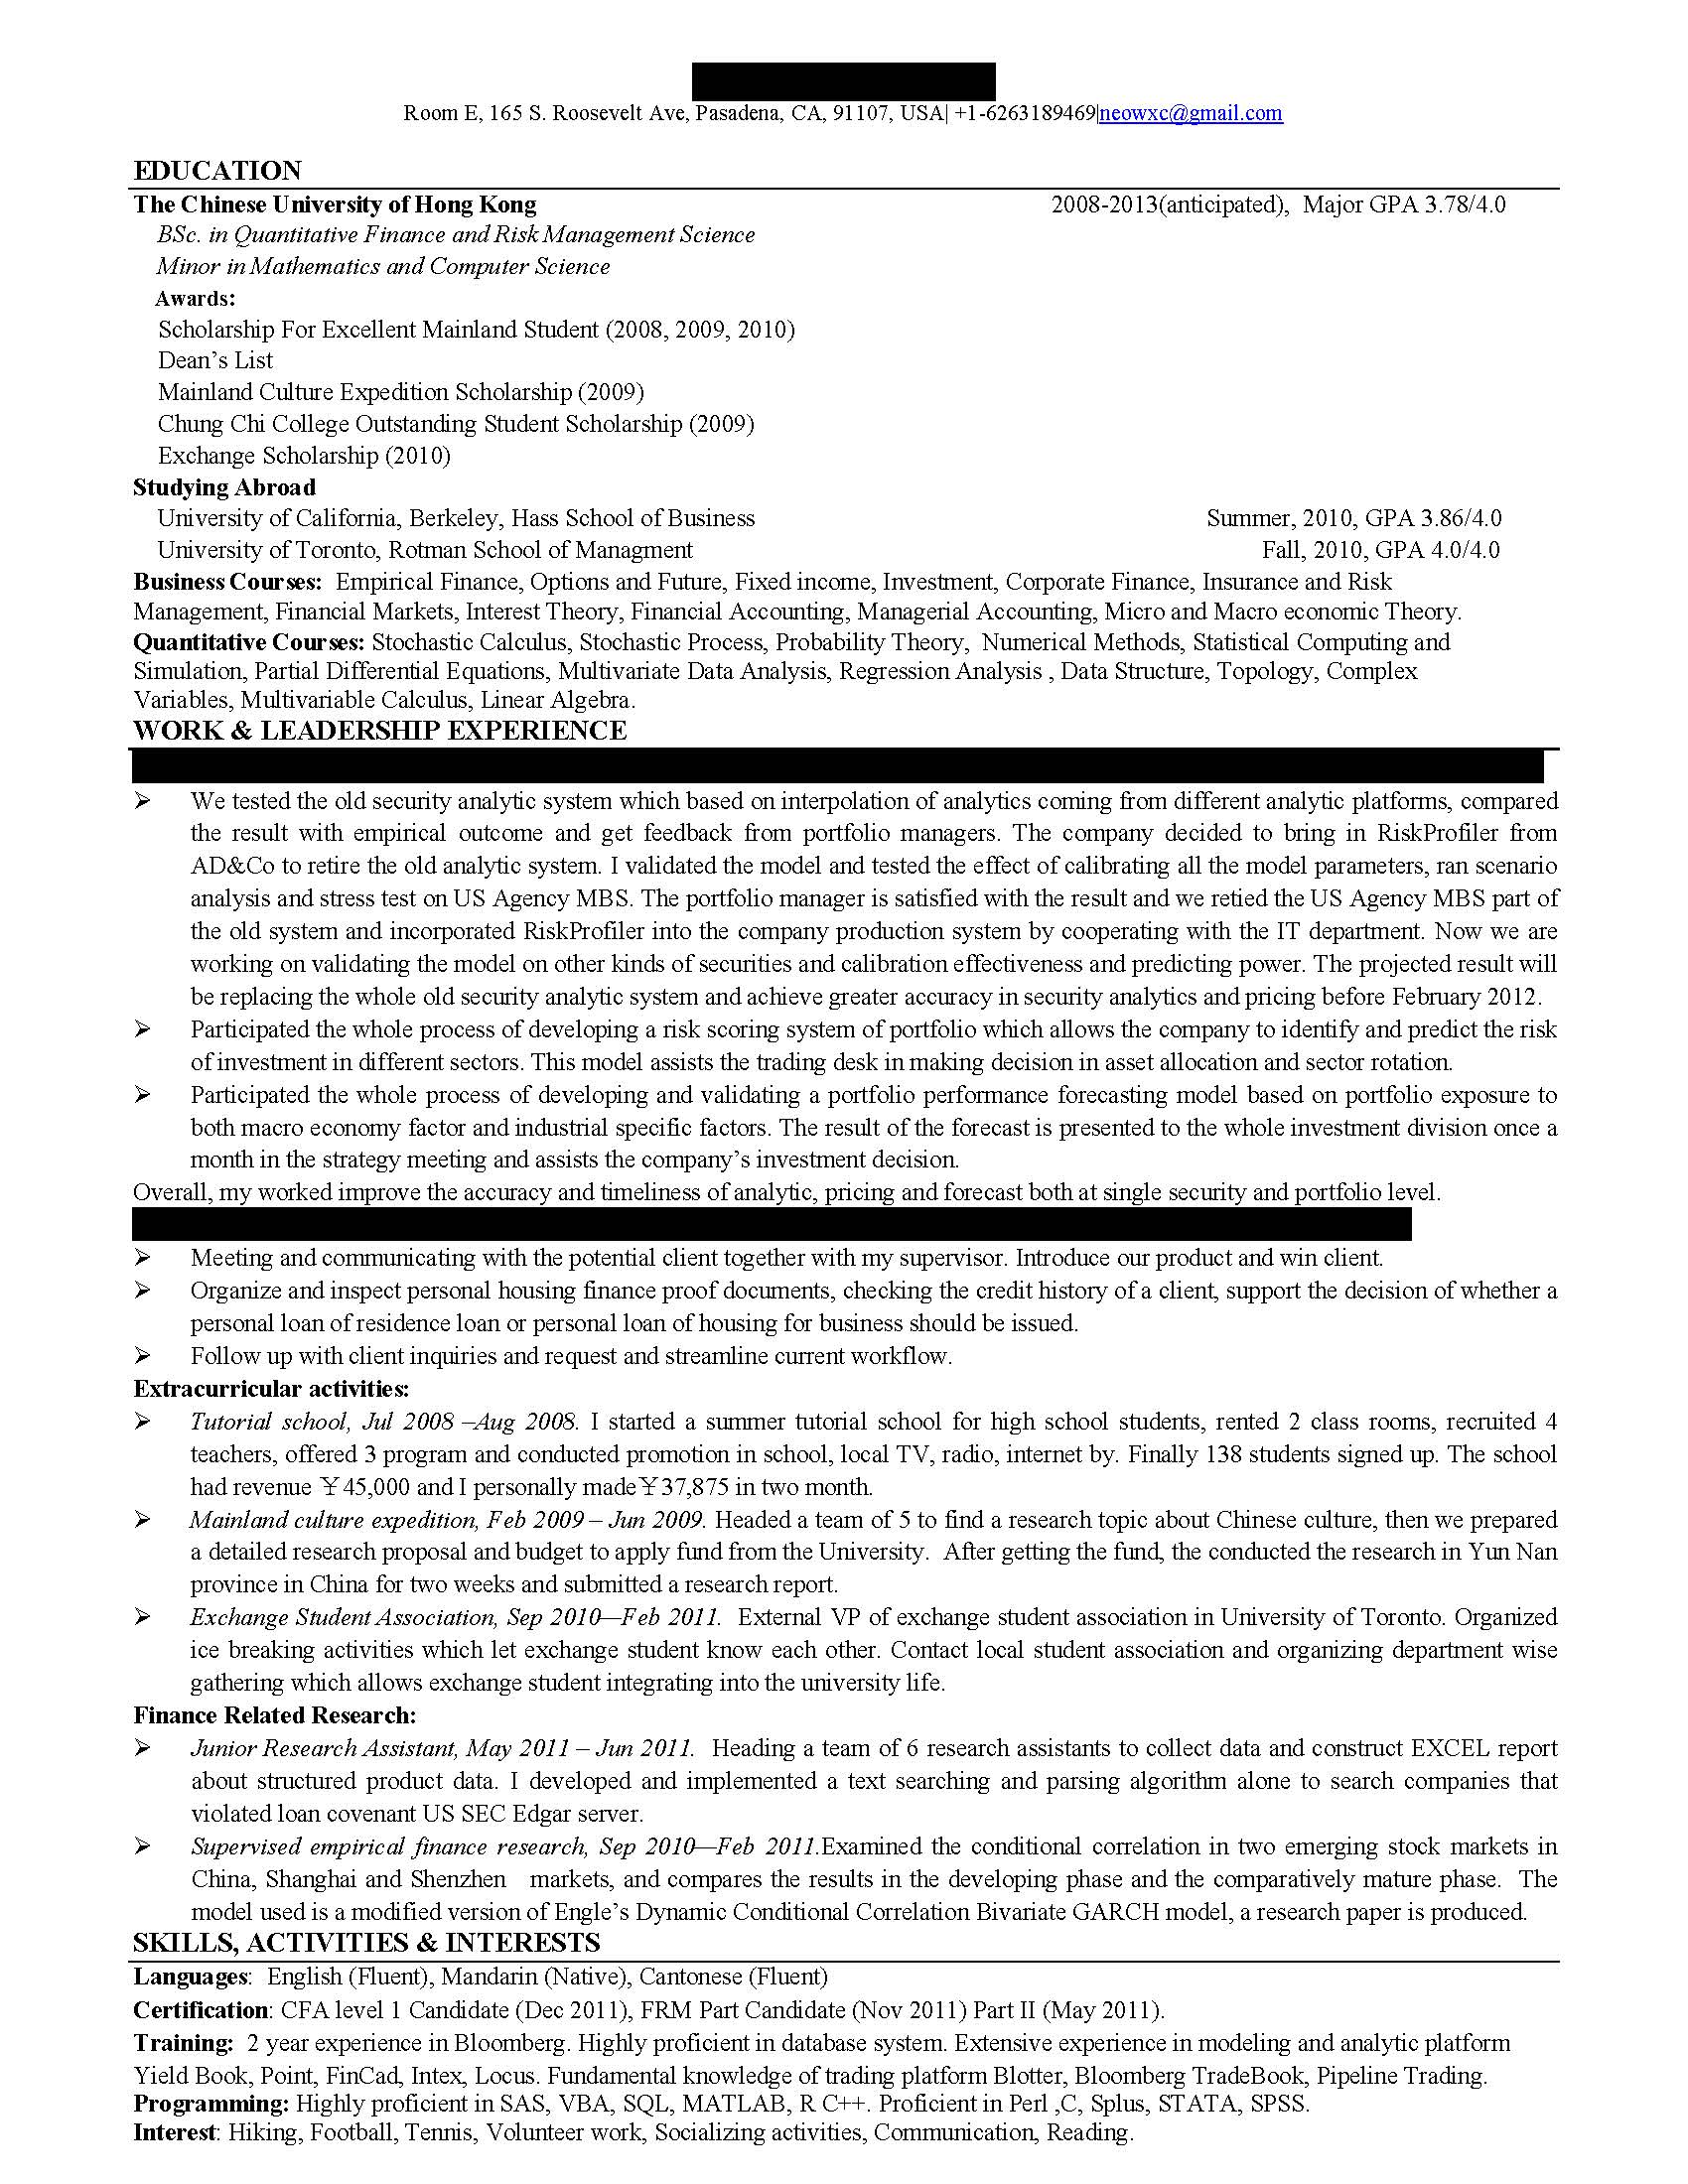 undergraduate resume for ibd review